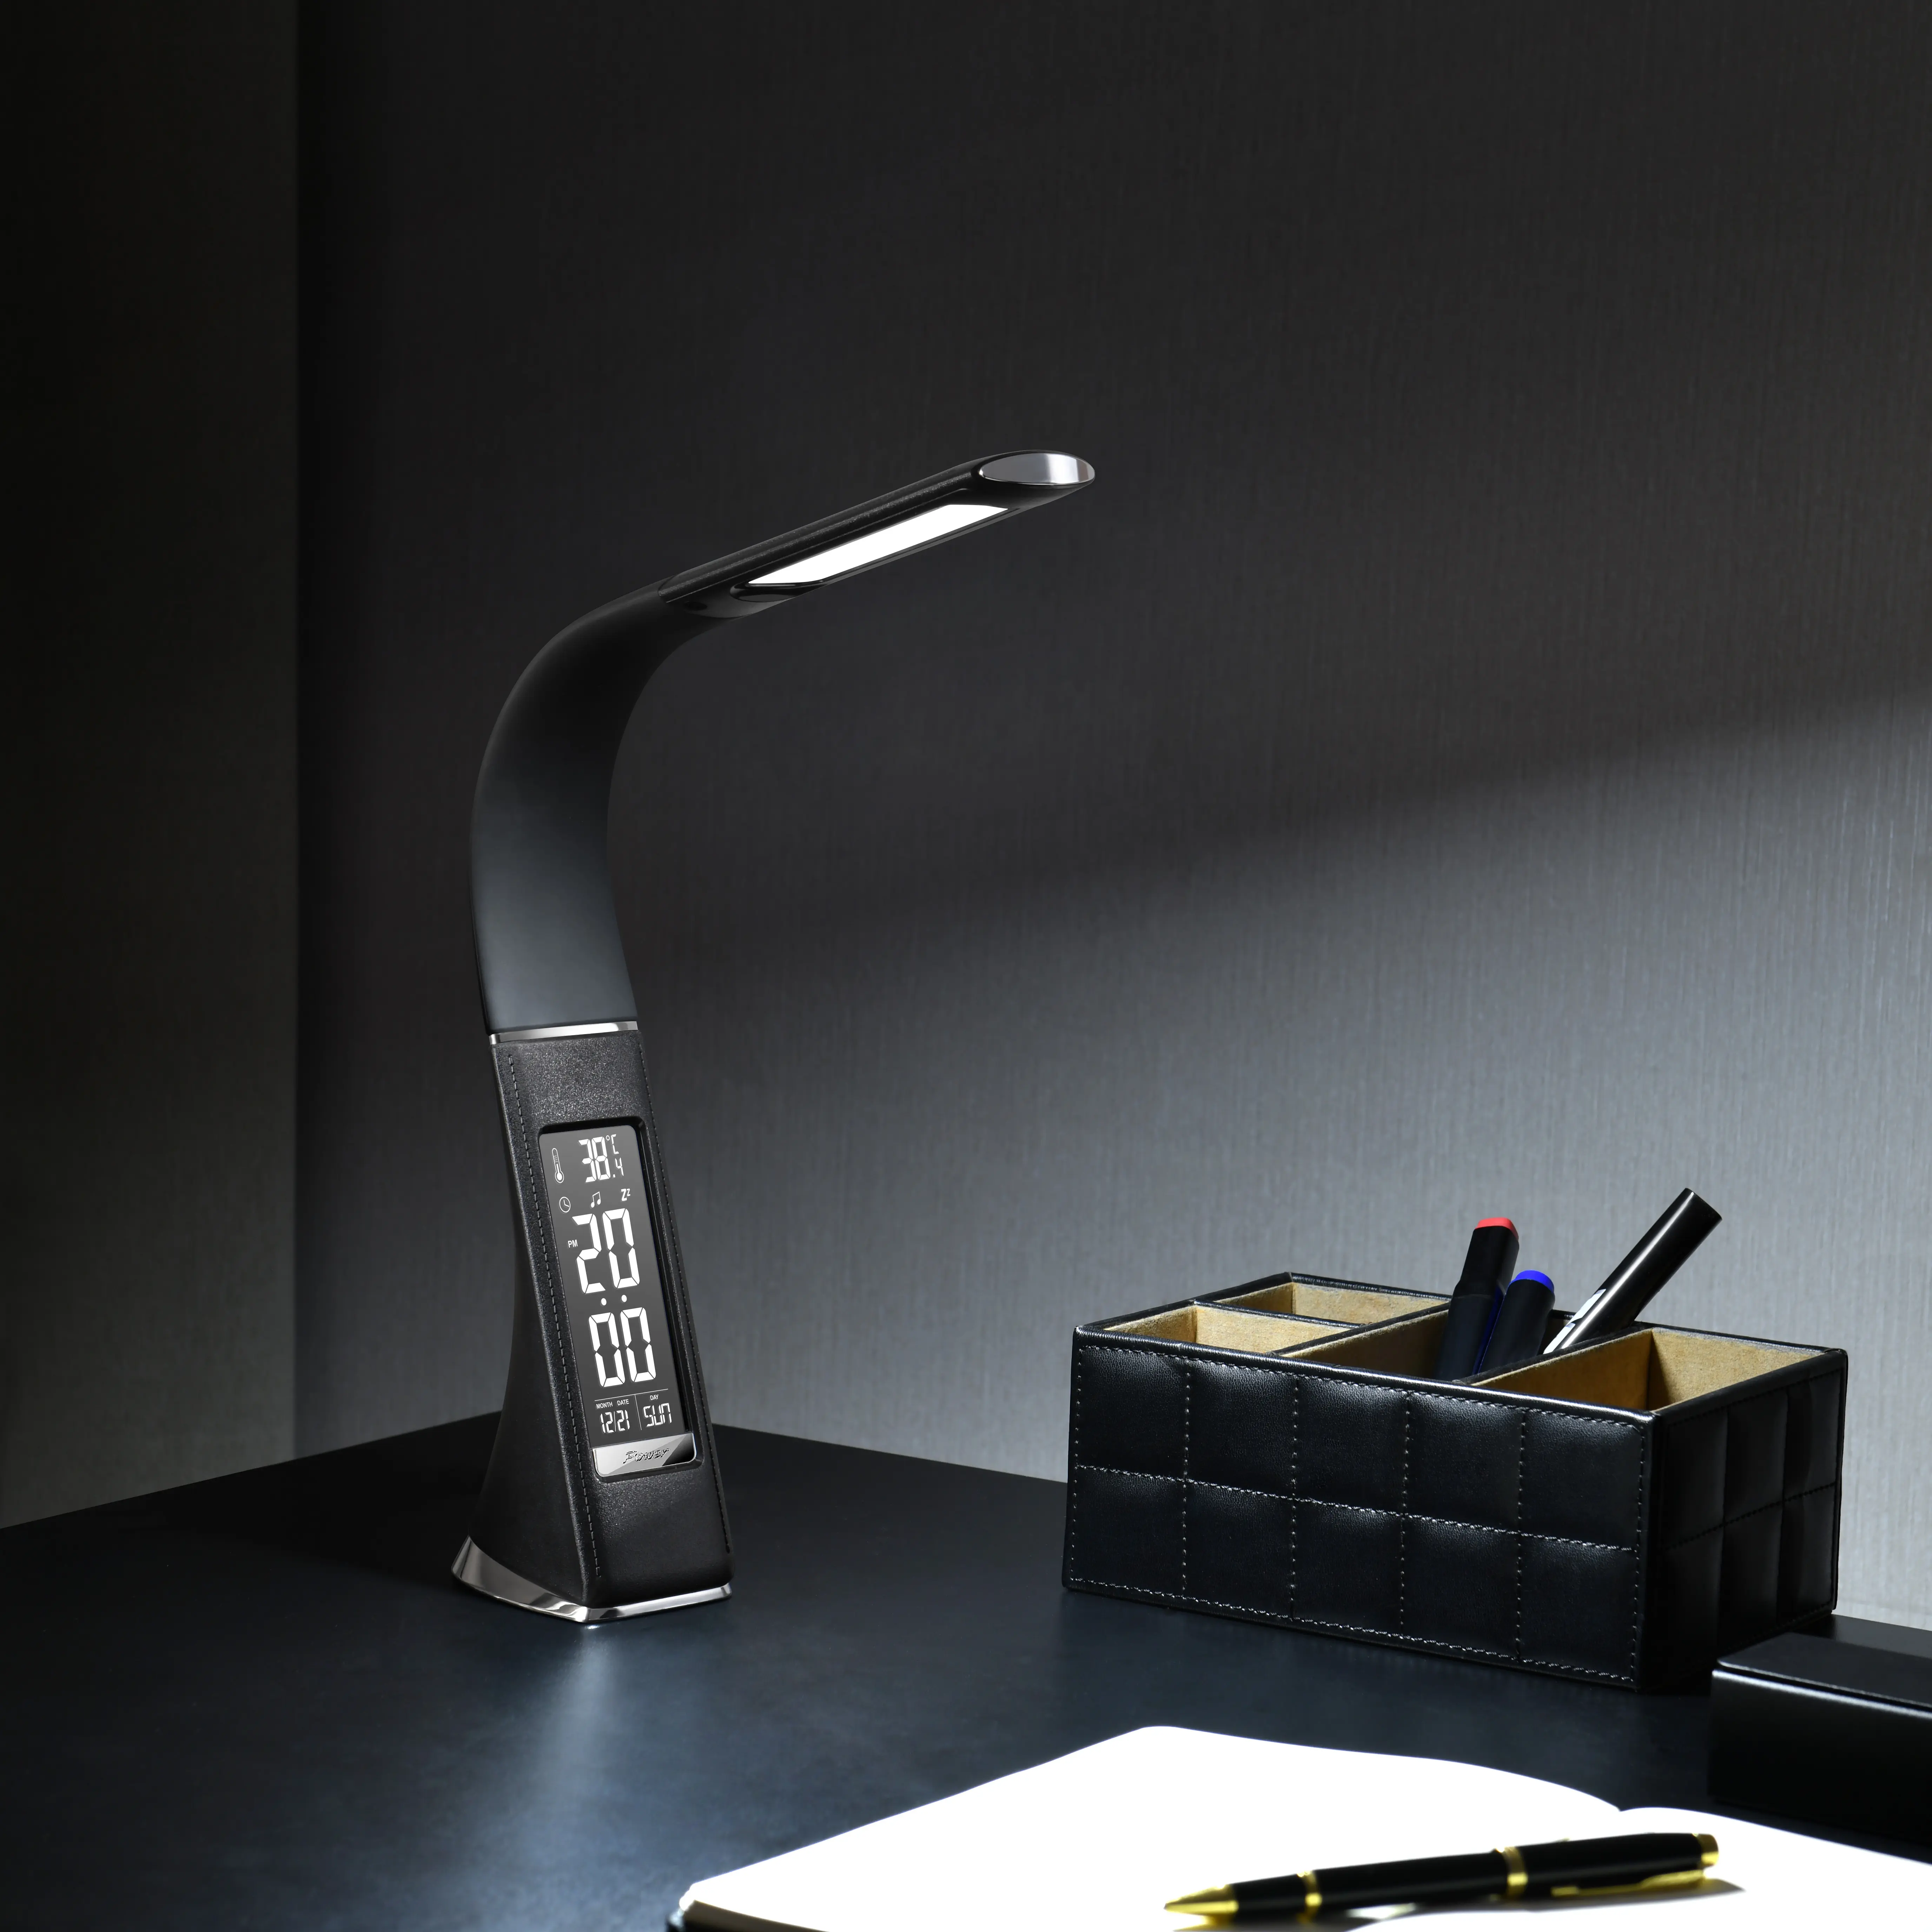 LED Desk Lamp USB Charging Dimmable Adjust Desk Lamp Touch Sensitive Switch Led Light Bed Side Table Lamp